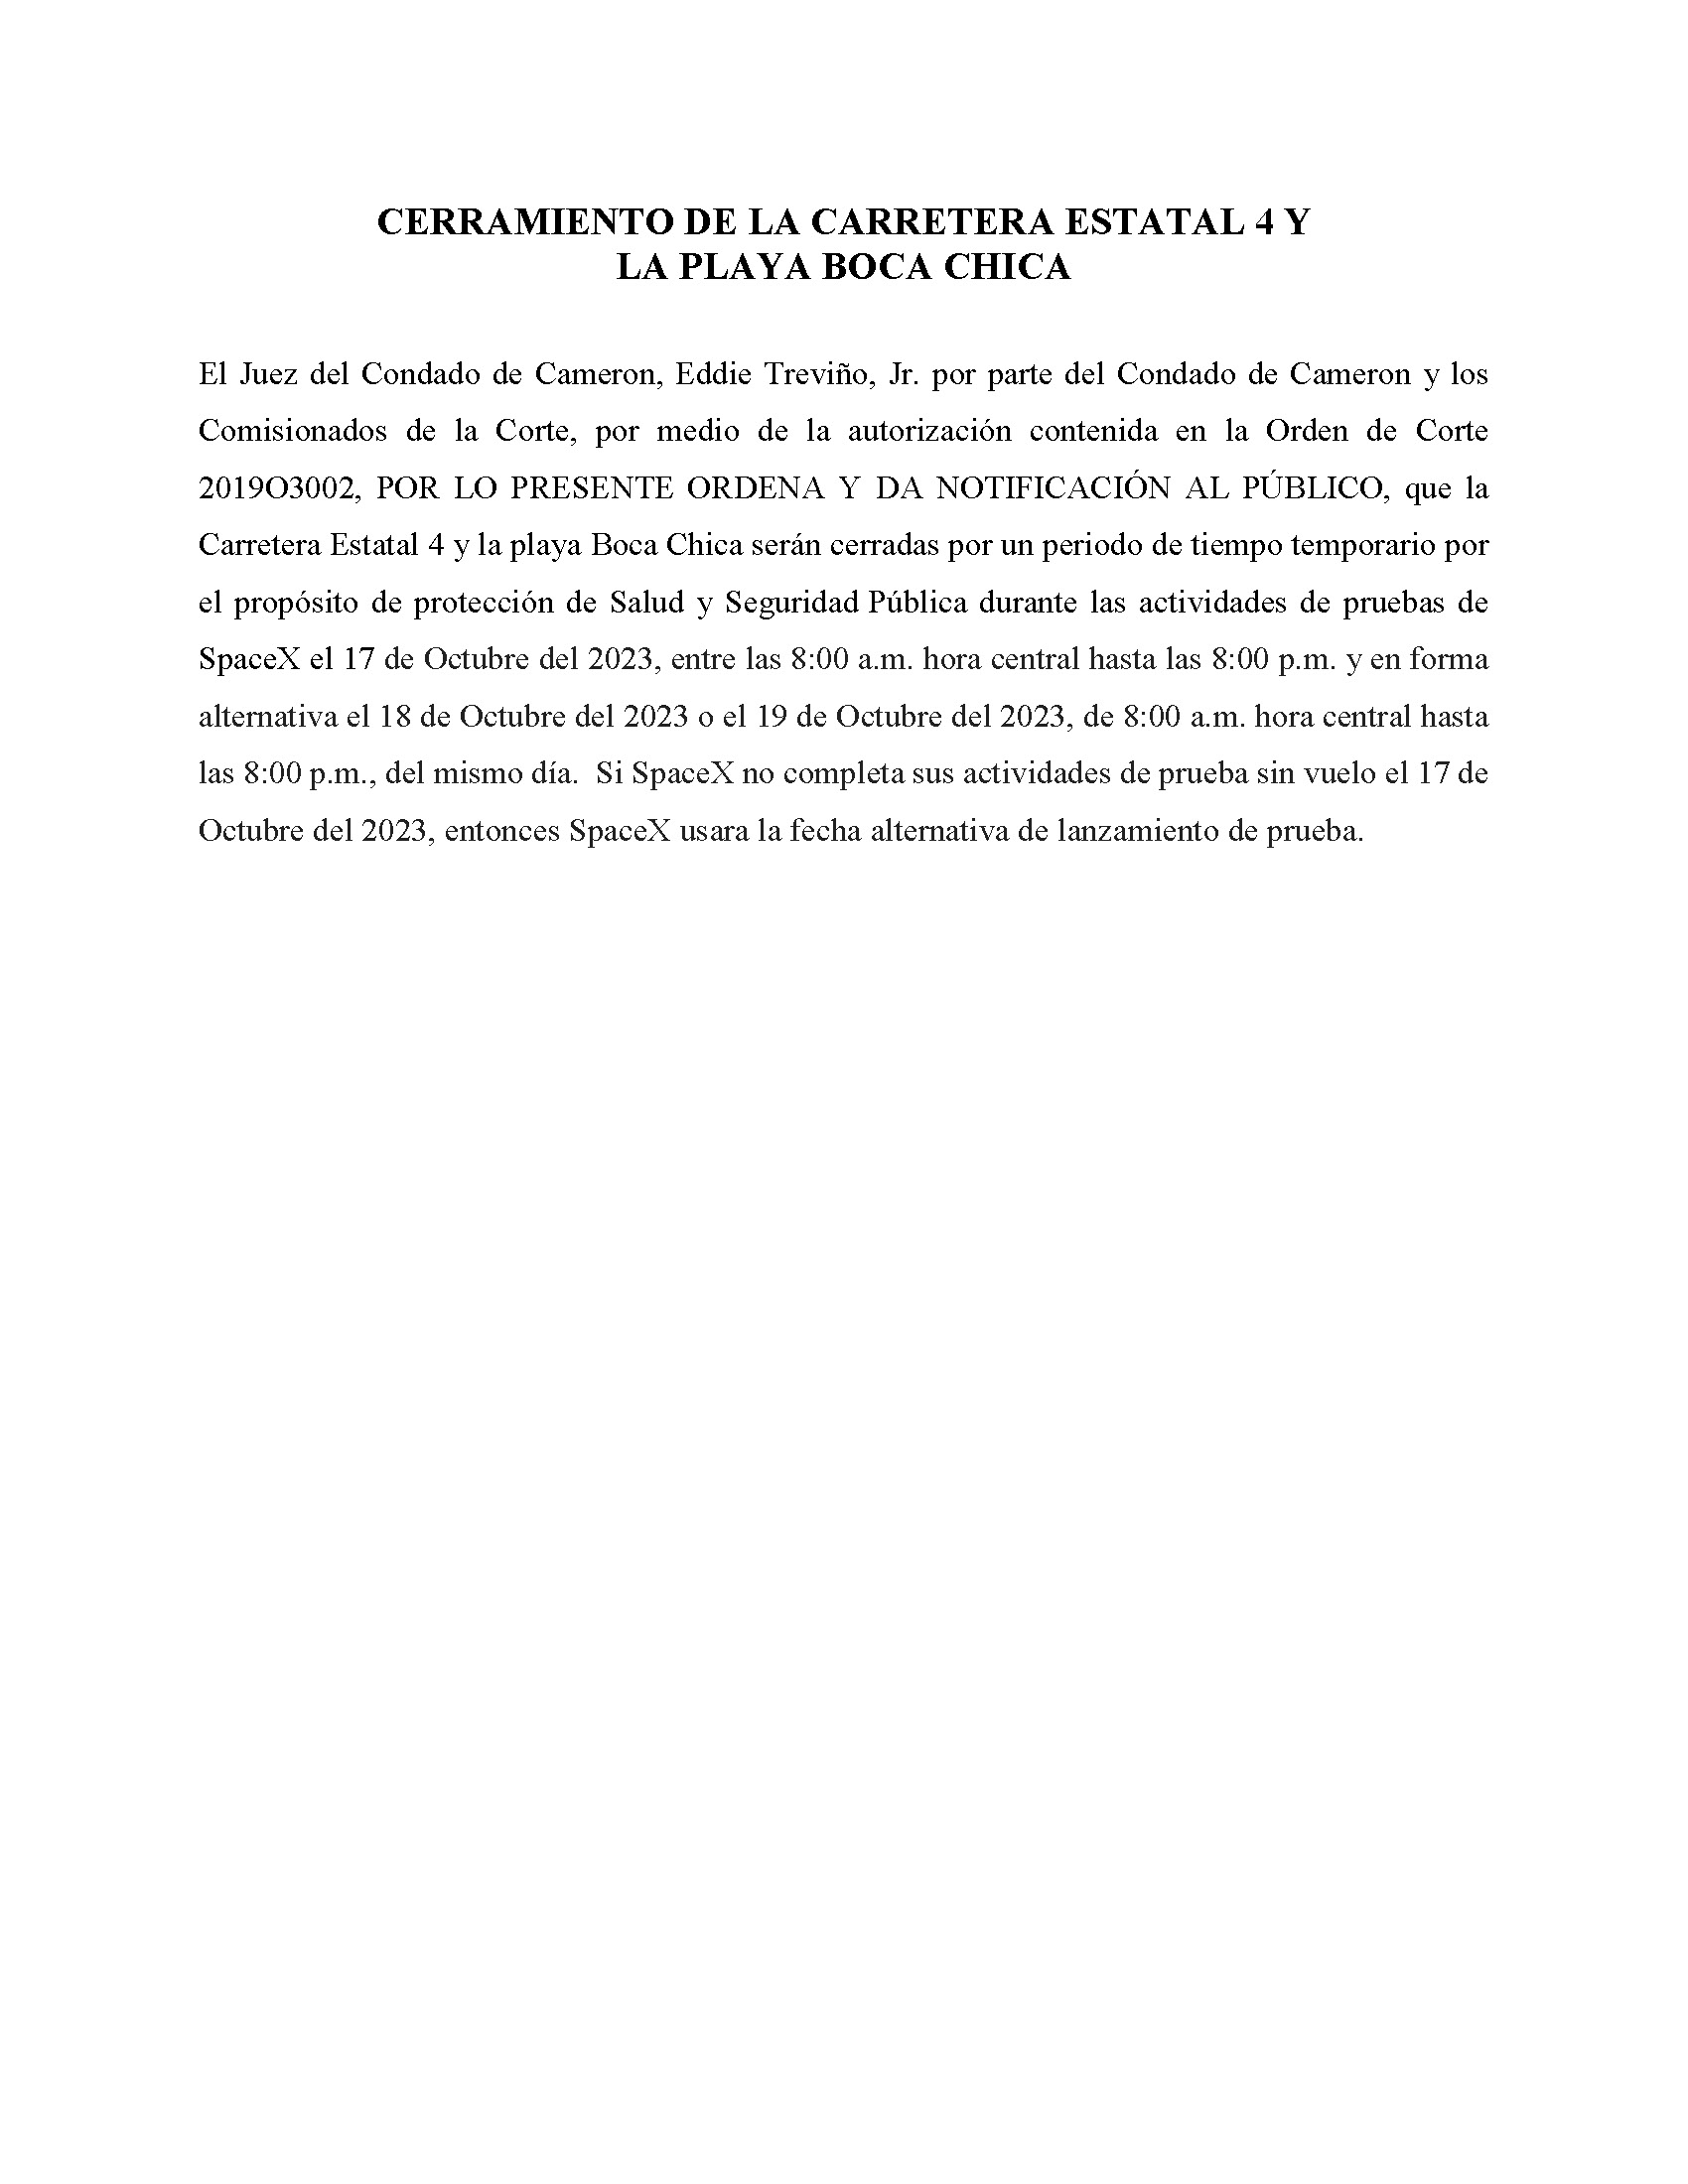 ORDER.CLOSURE OF HIGHWAY 4 Y LA PLAYA BOCA CHICA.SPANISH.10.17.23